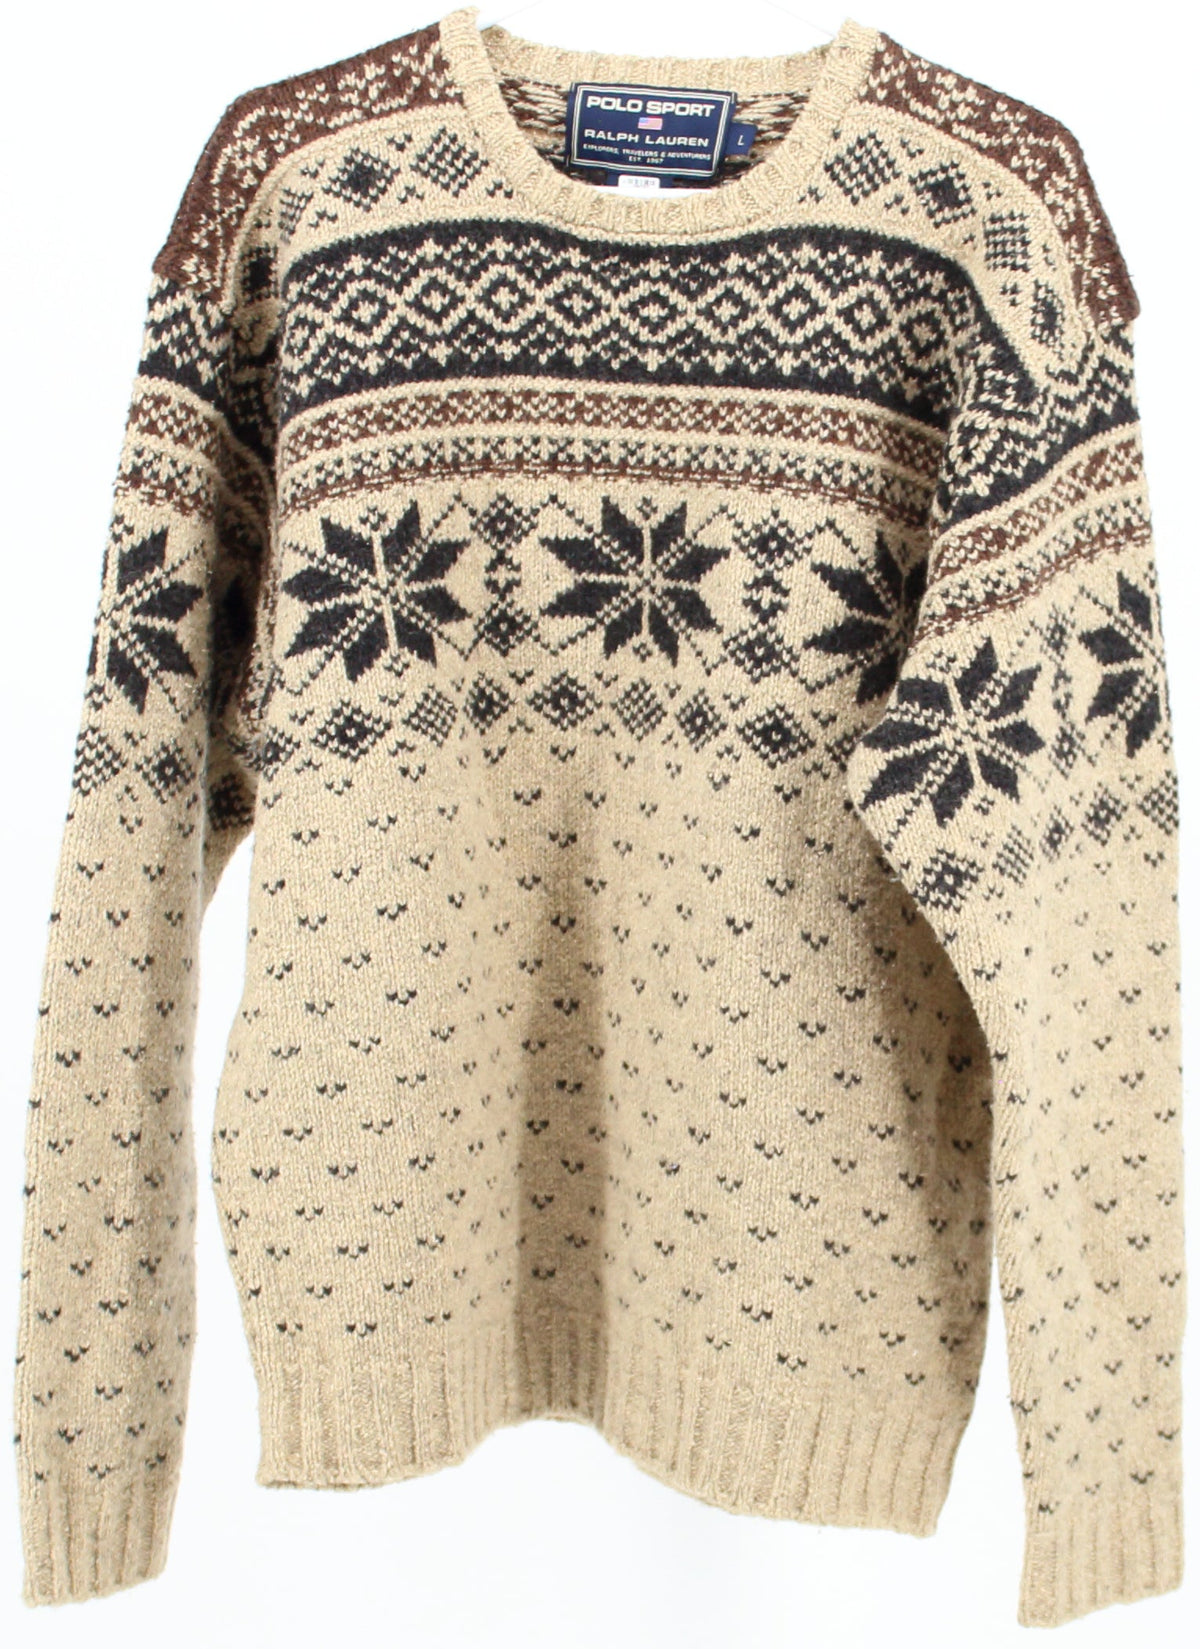 Polo Sport Ralph Lauren Jacquard Knit Sweater